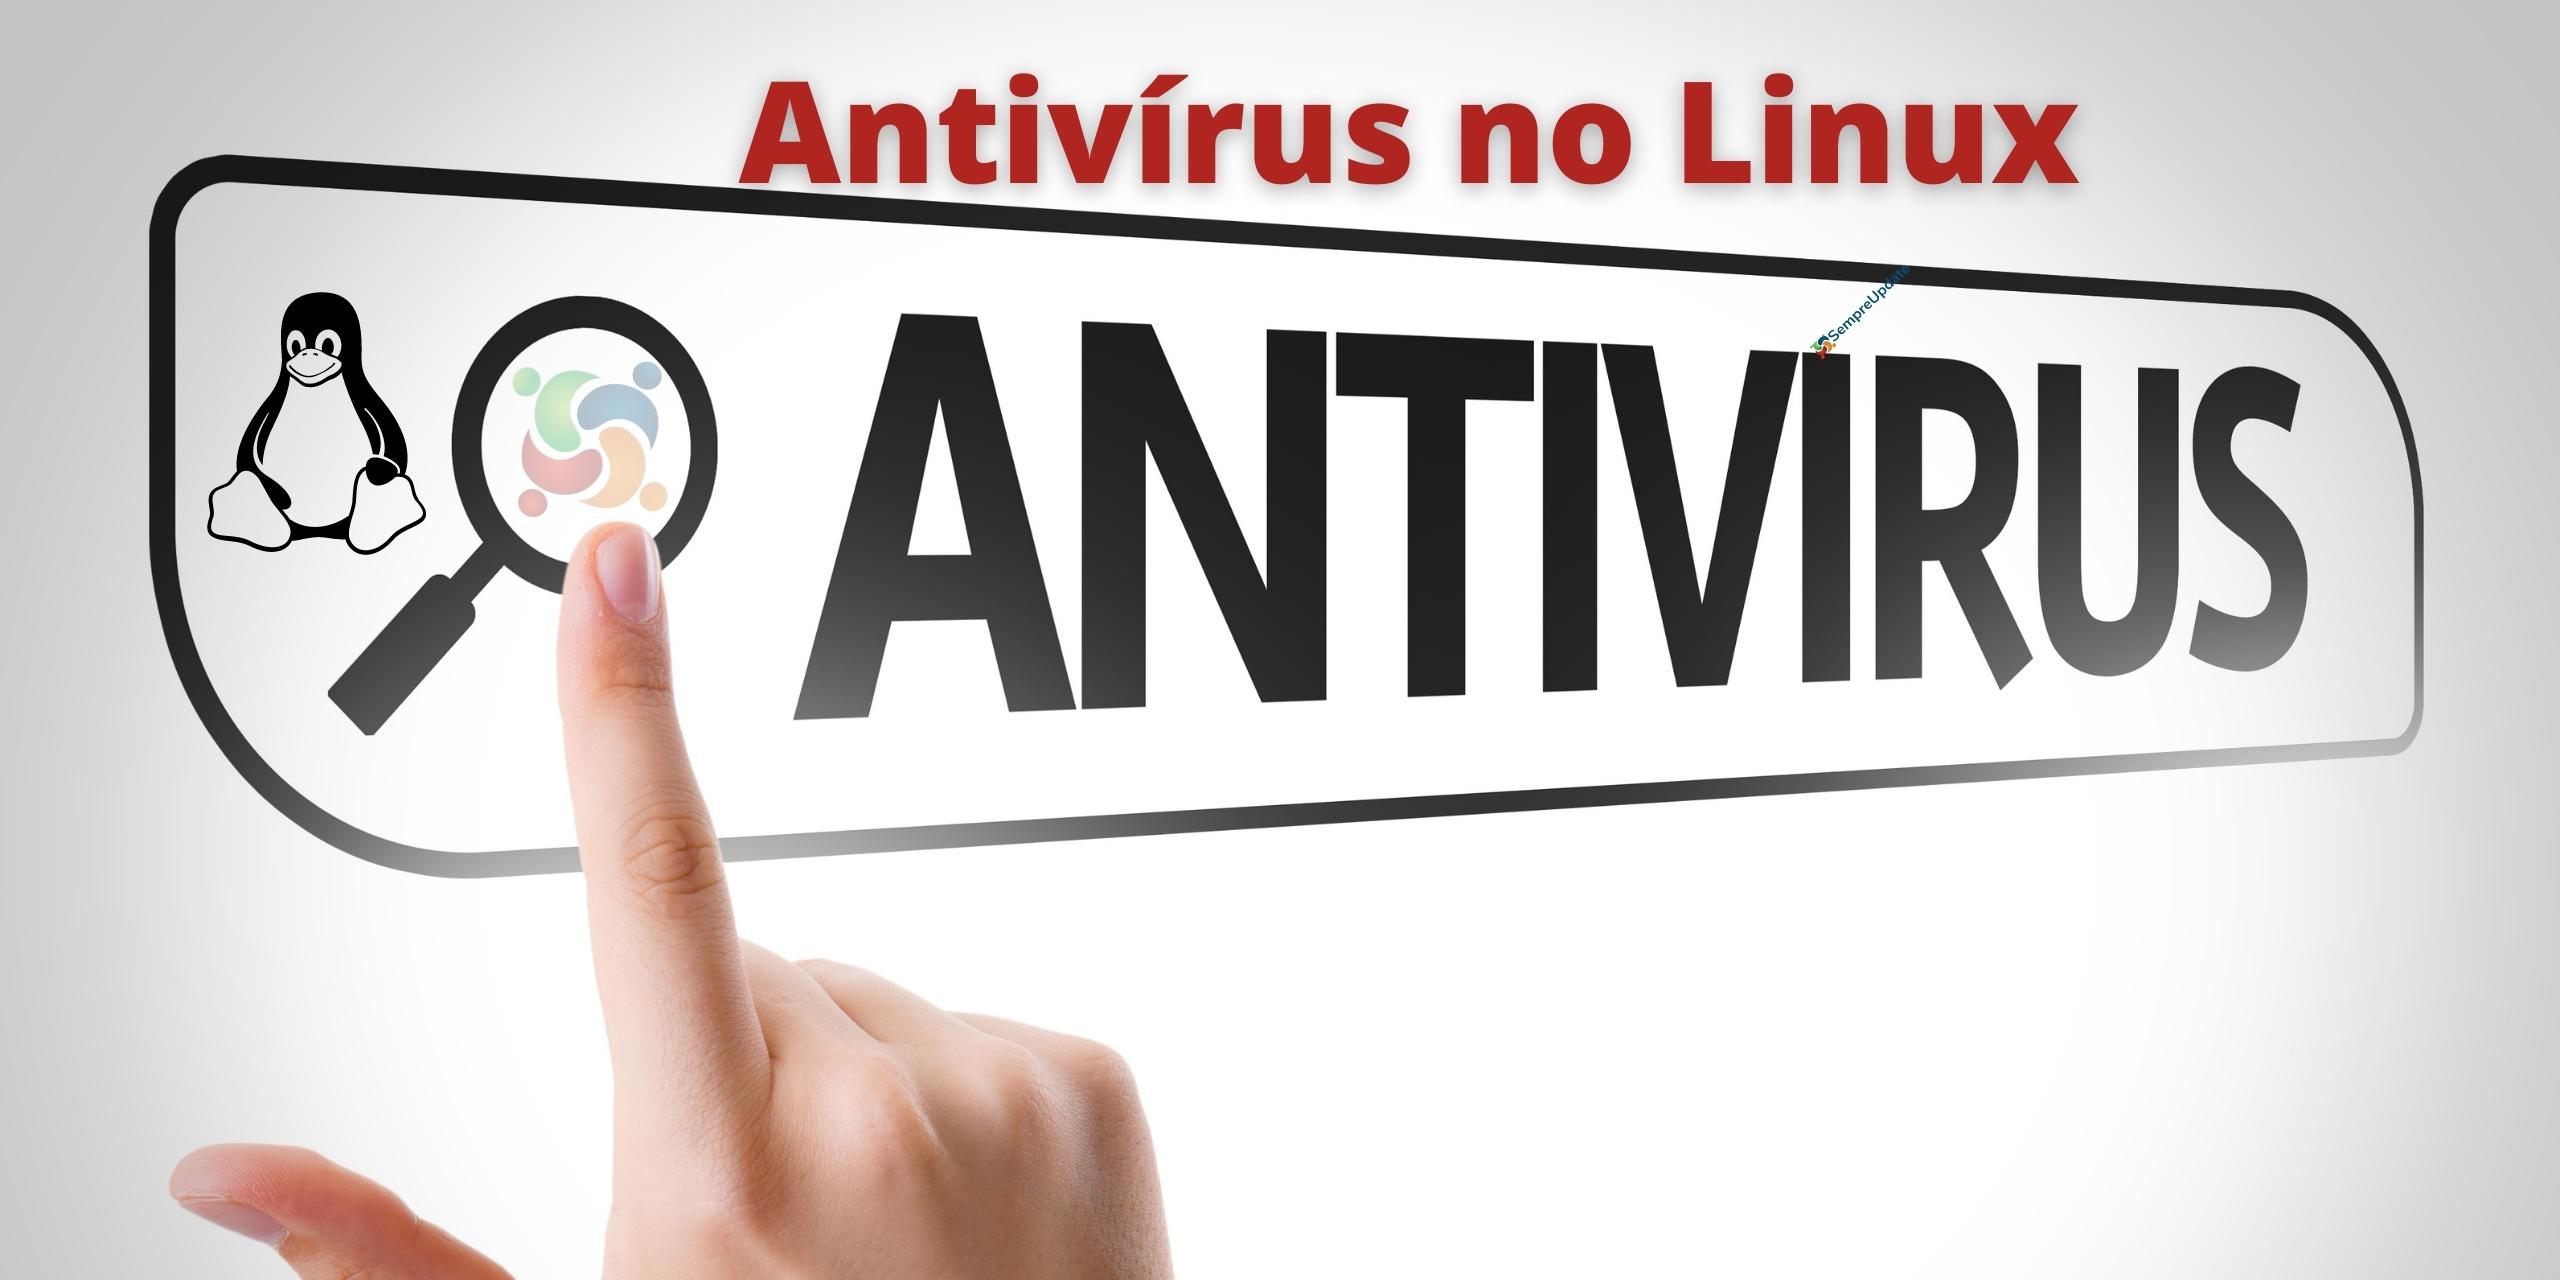 como-instalar-o-clamav-antivirus-no-ubuntu-debian-linux-mintfedora-centos-rhel